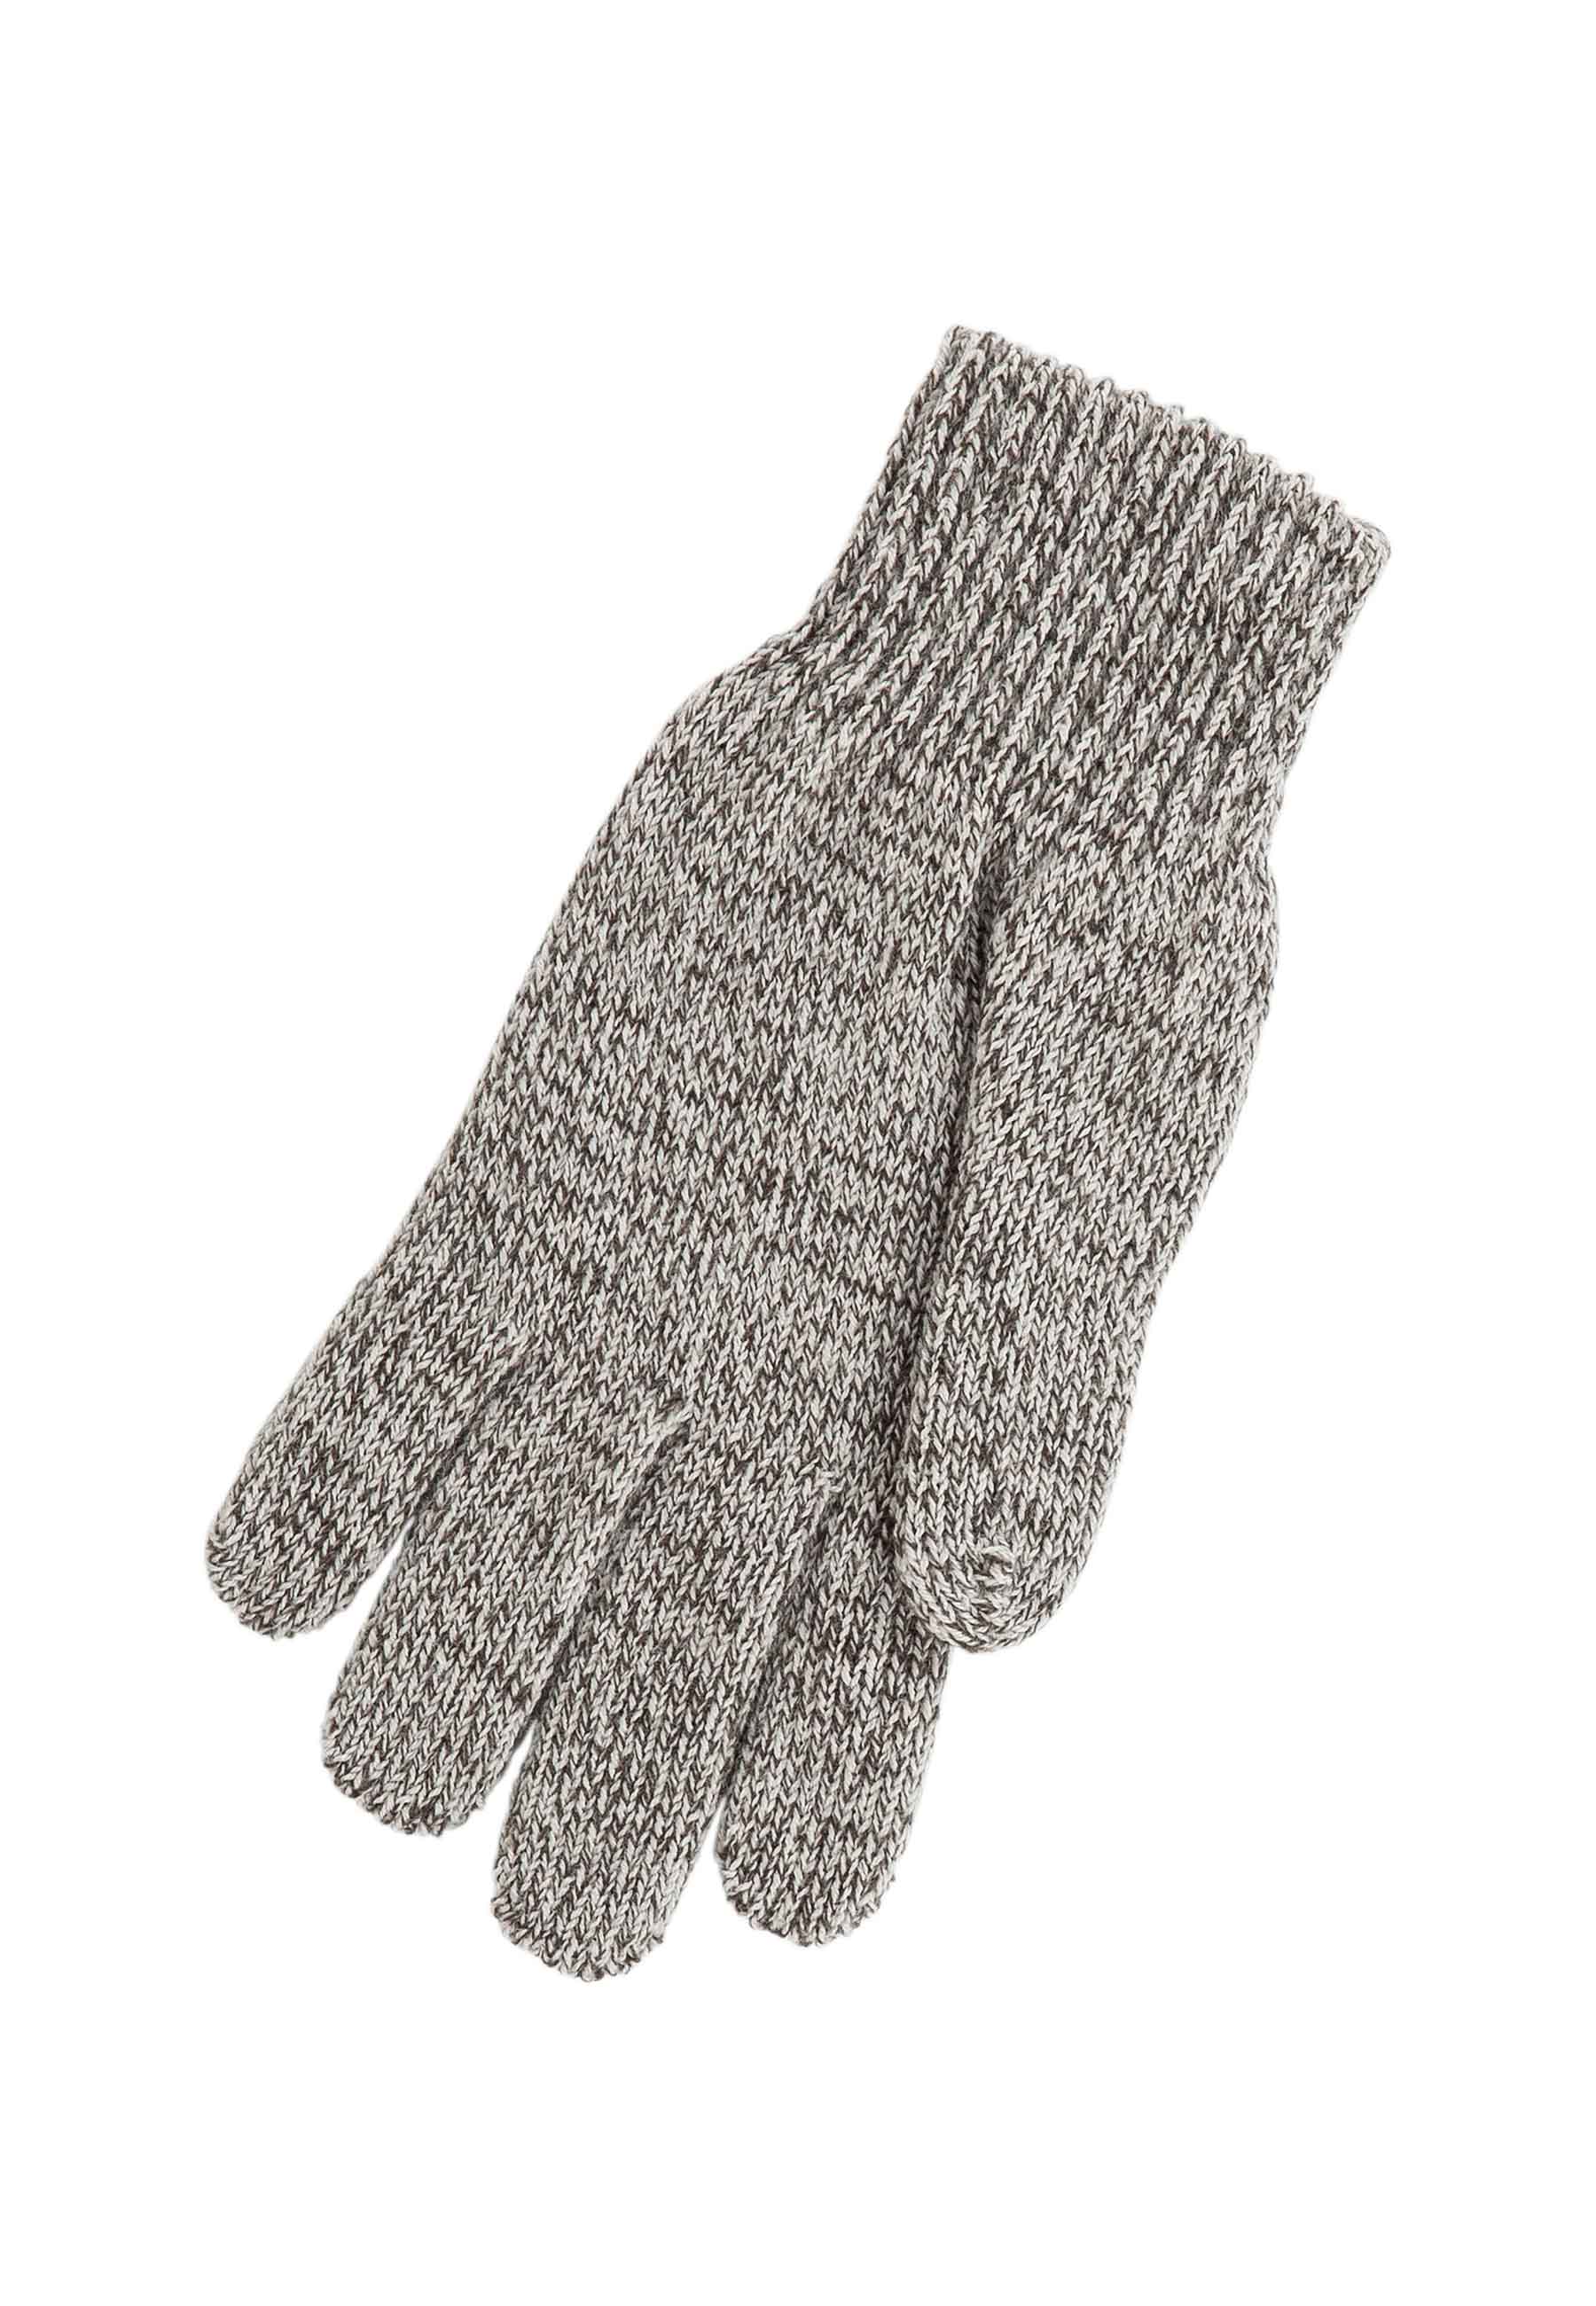 Wool Melange Gloves